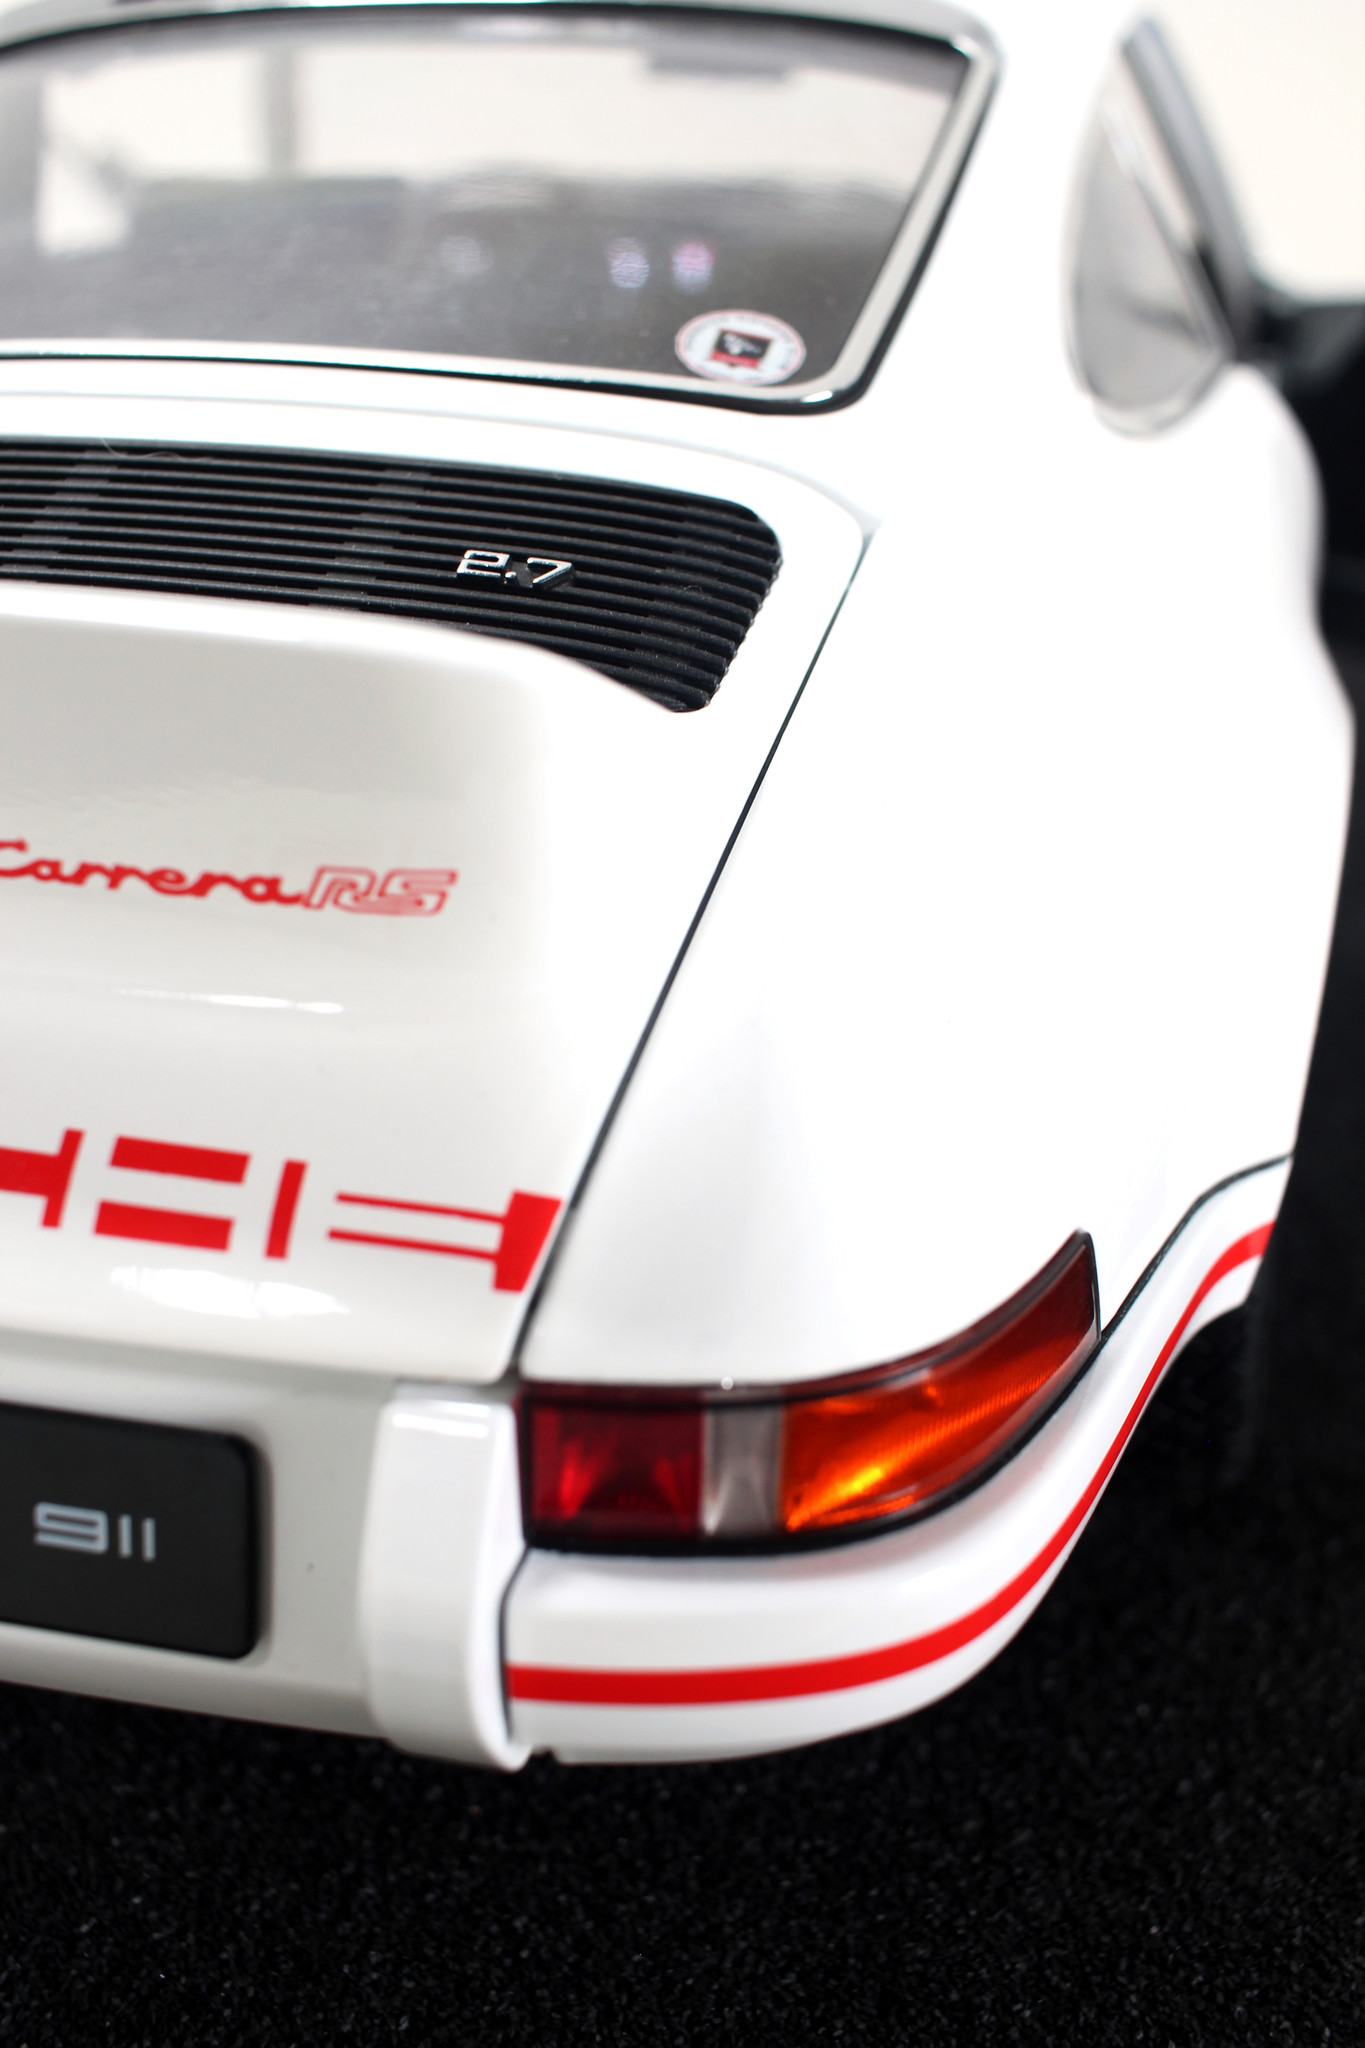 Porsche RS 2.7 scale model 1: 8